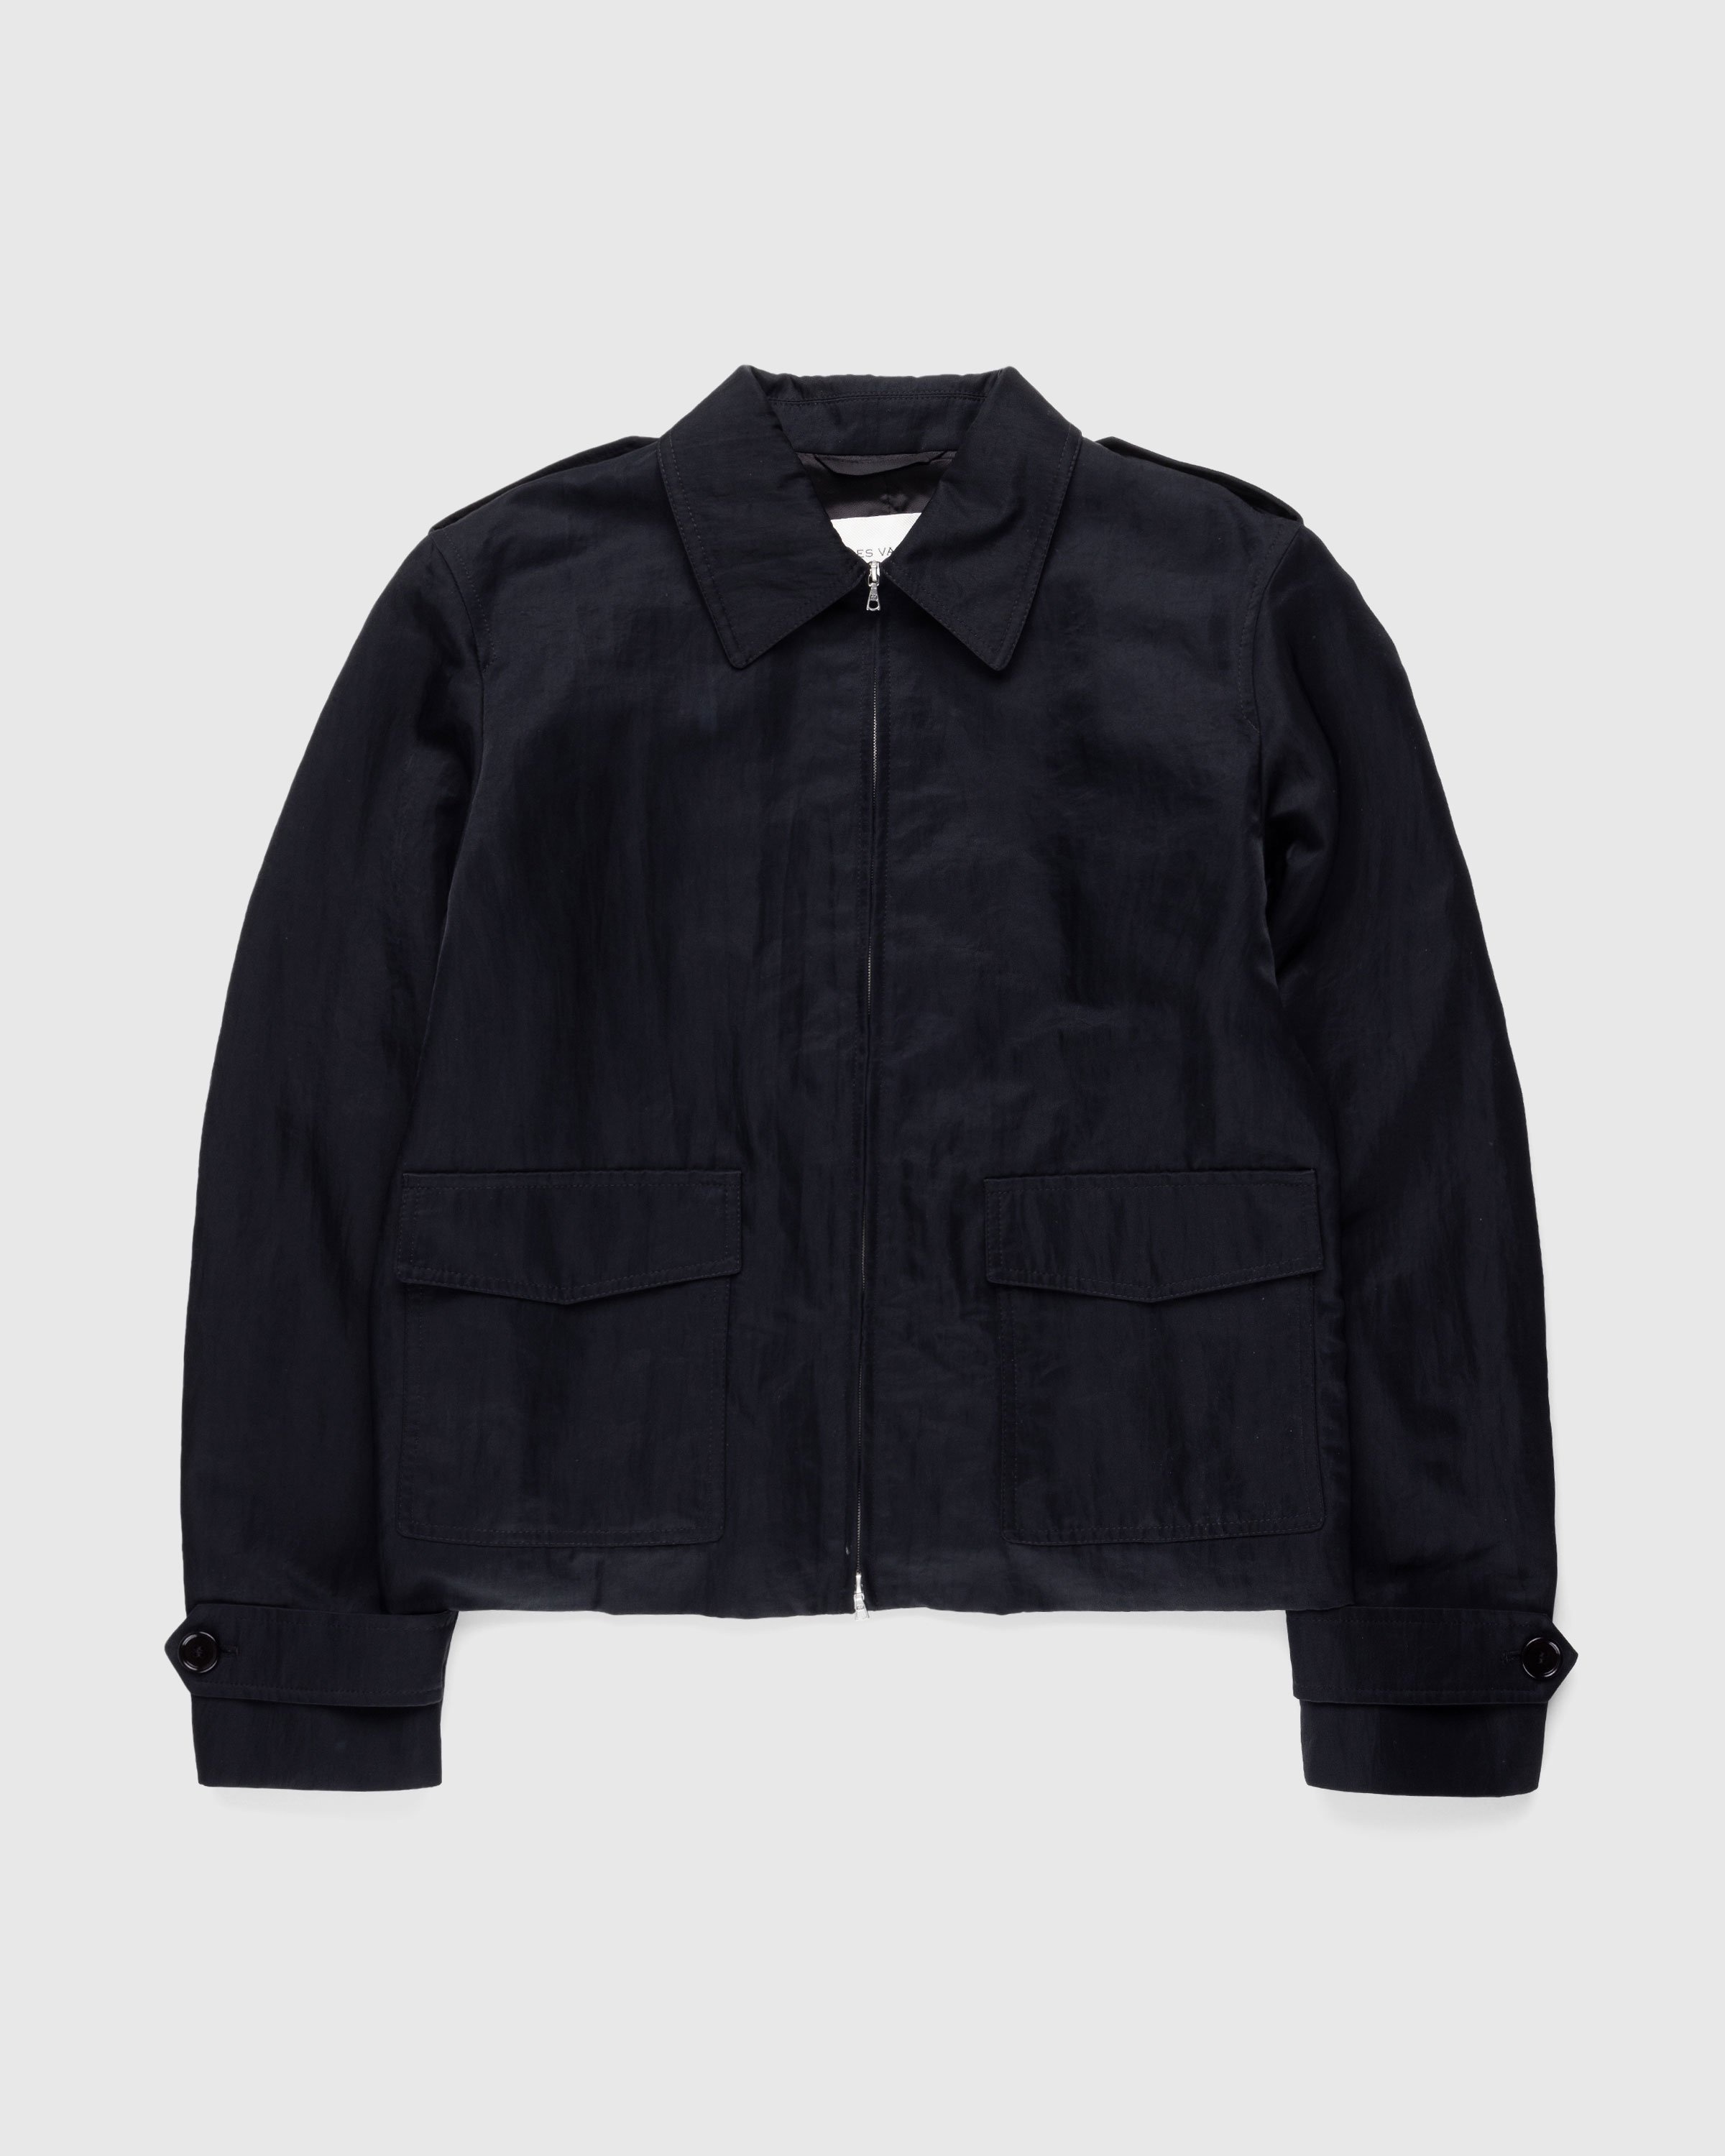 Dries van Noten – Vallow Jacket Black - Outerwear - Black - Image 1